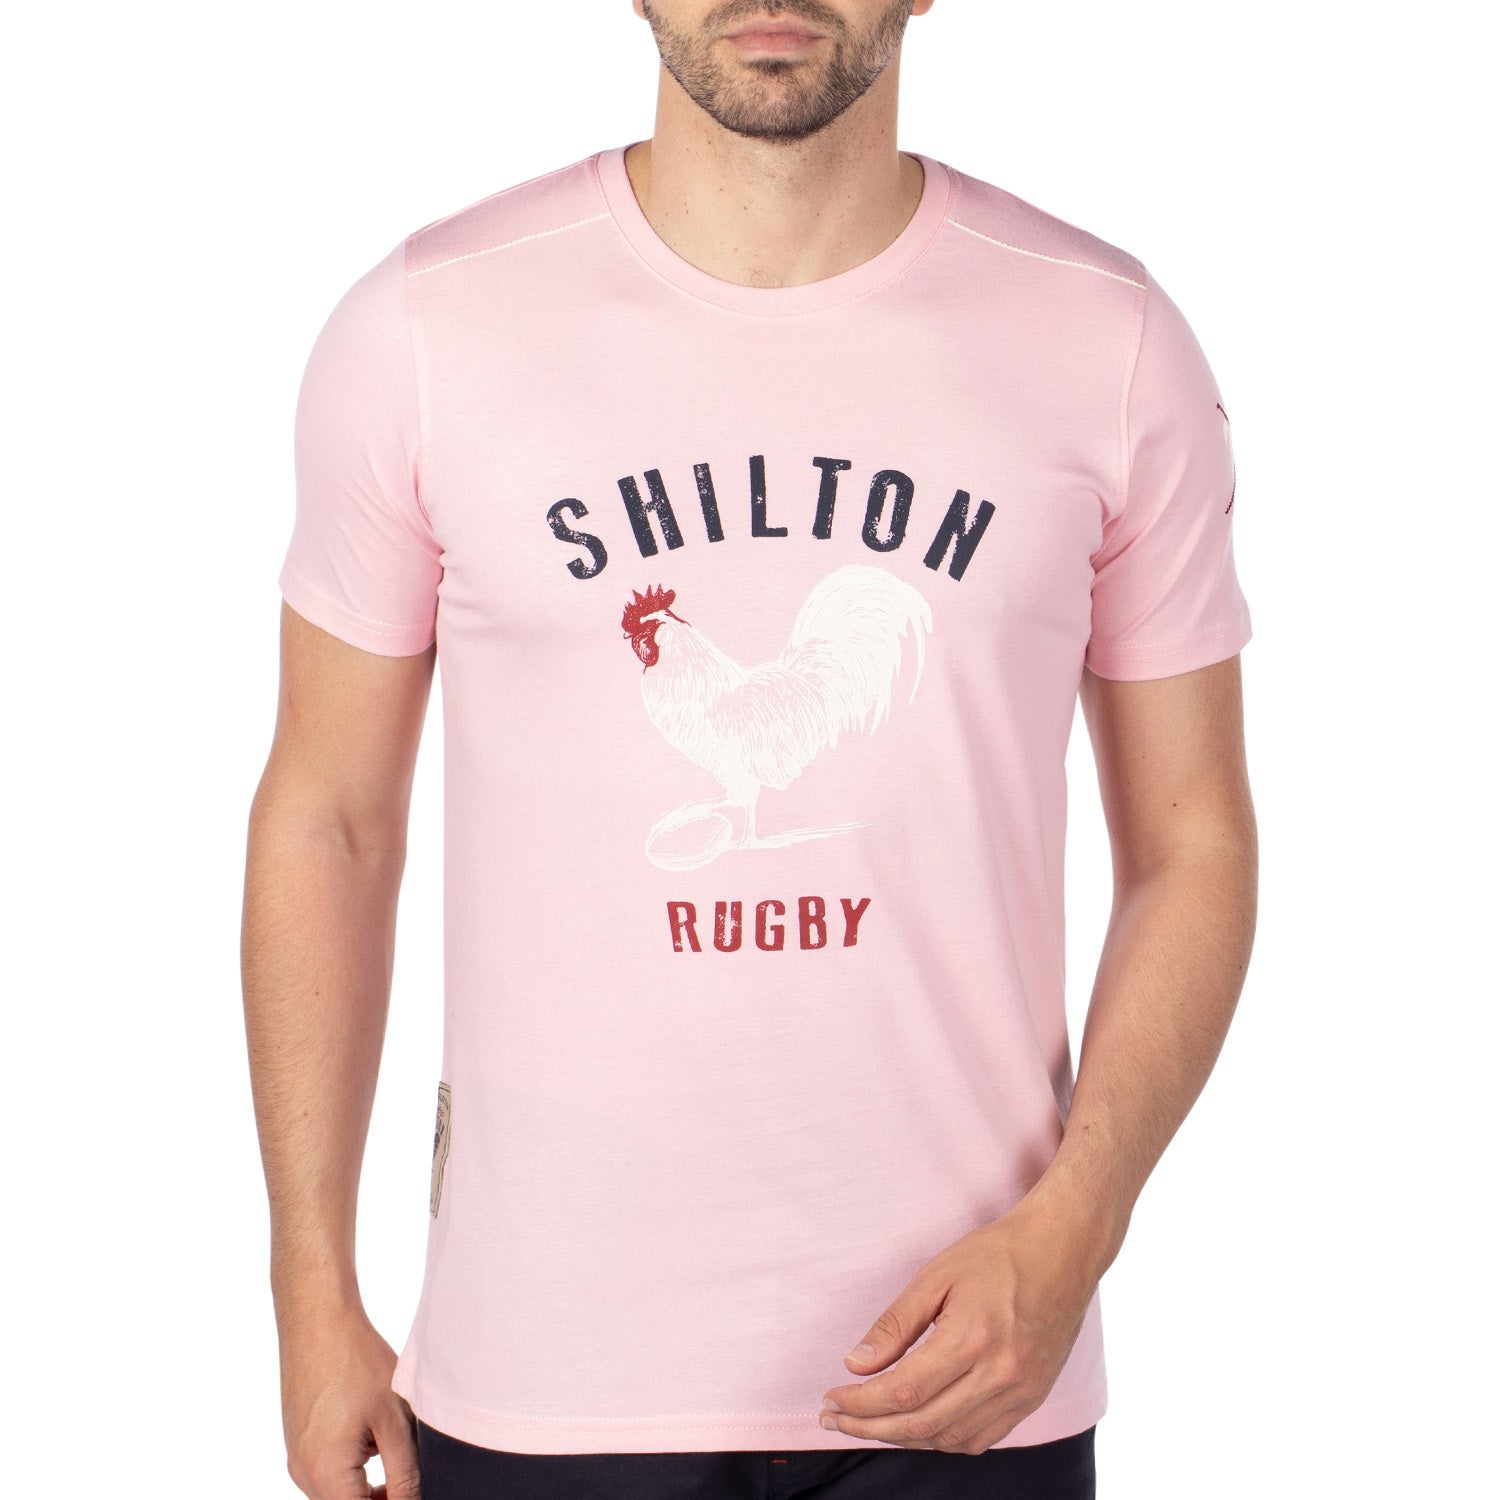 T-shirt rugby unity Rose - Shilton